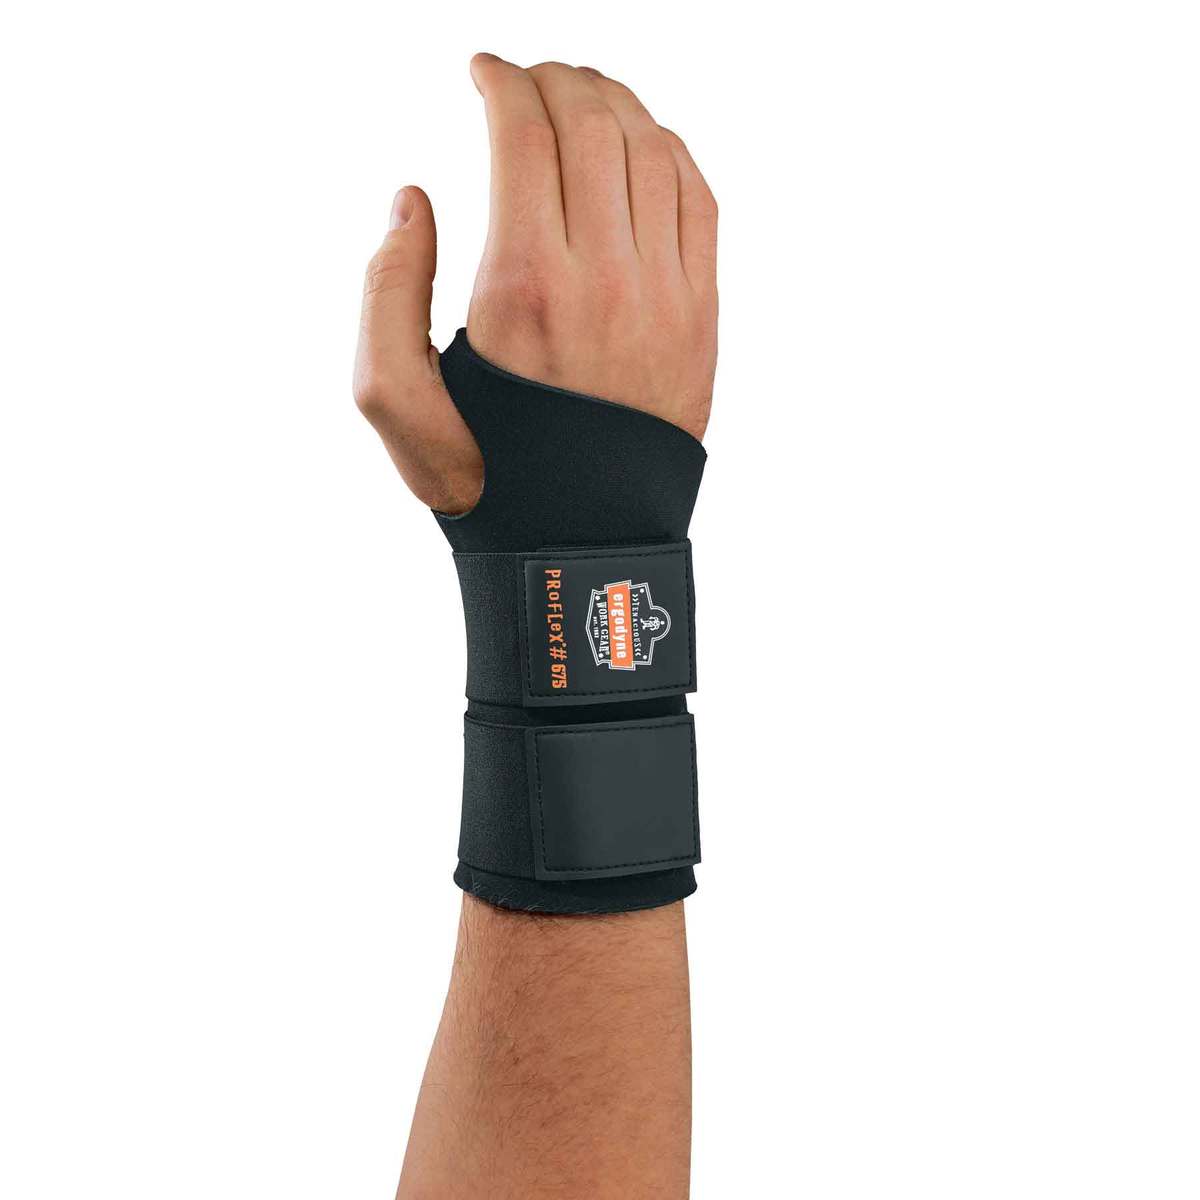 Ergodyne Large Black ProFlex® 675 Neoprene Ambidextrous Wrist Support